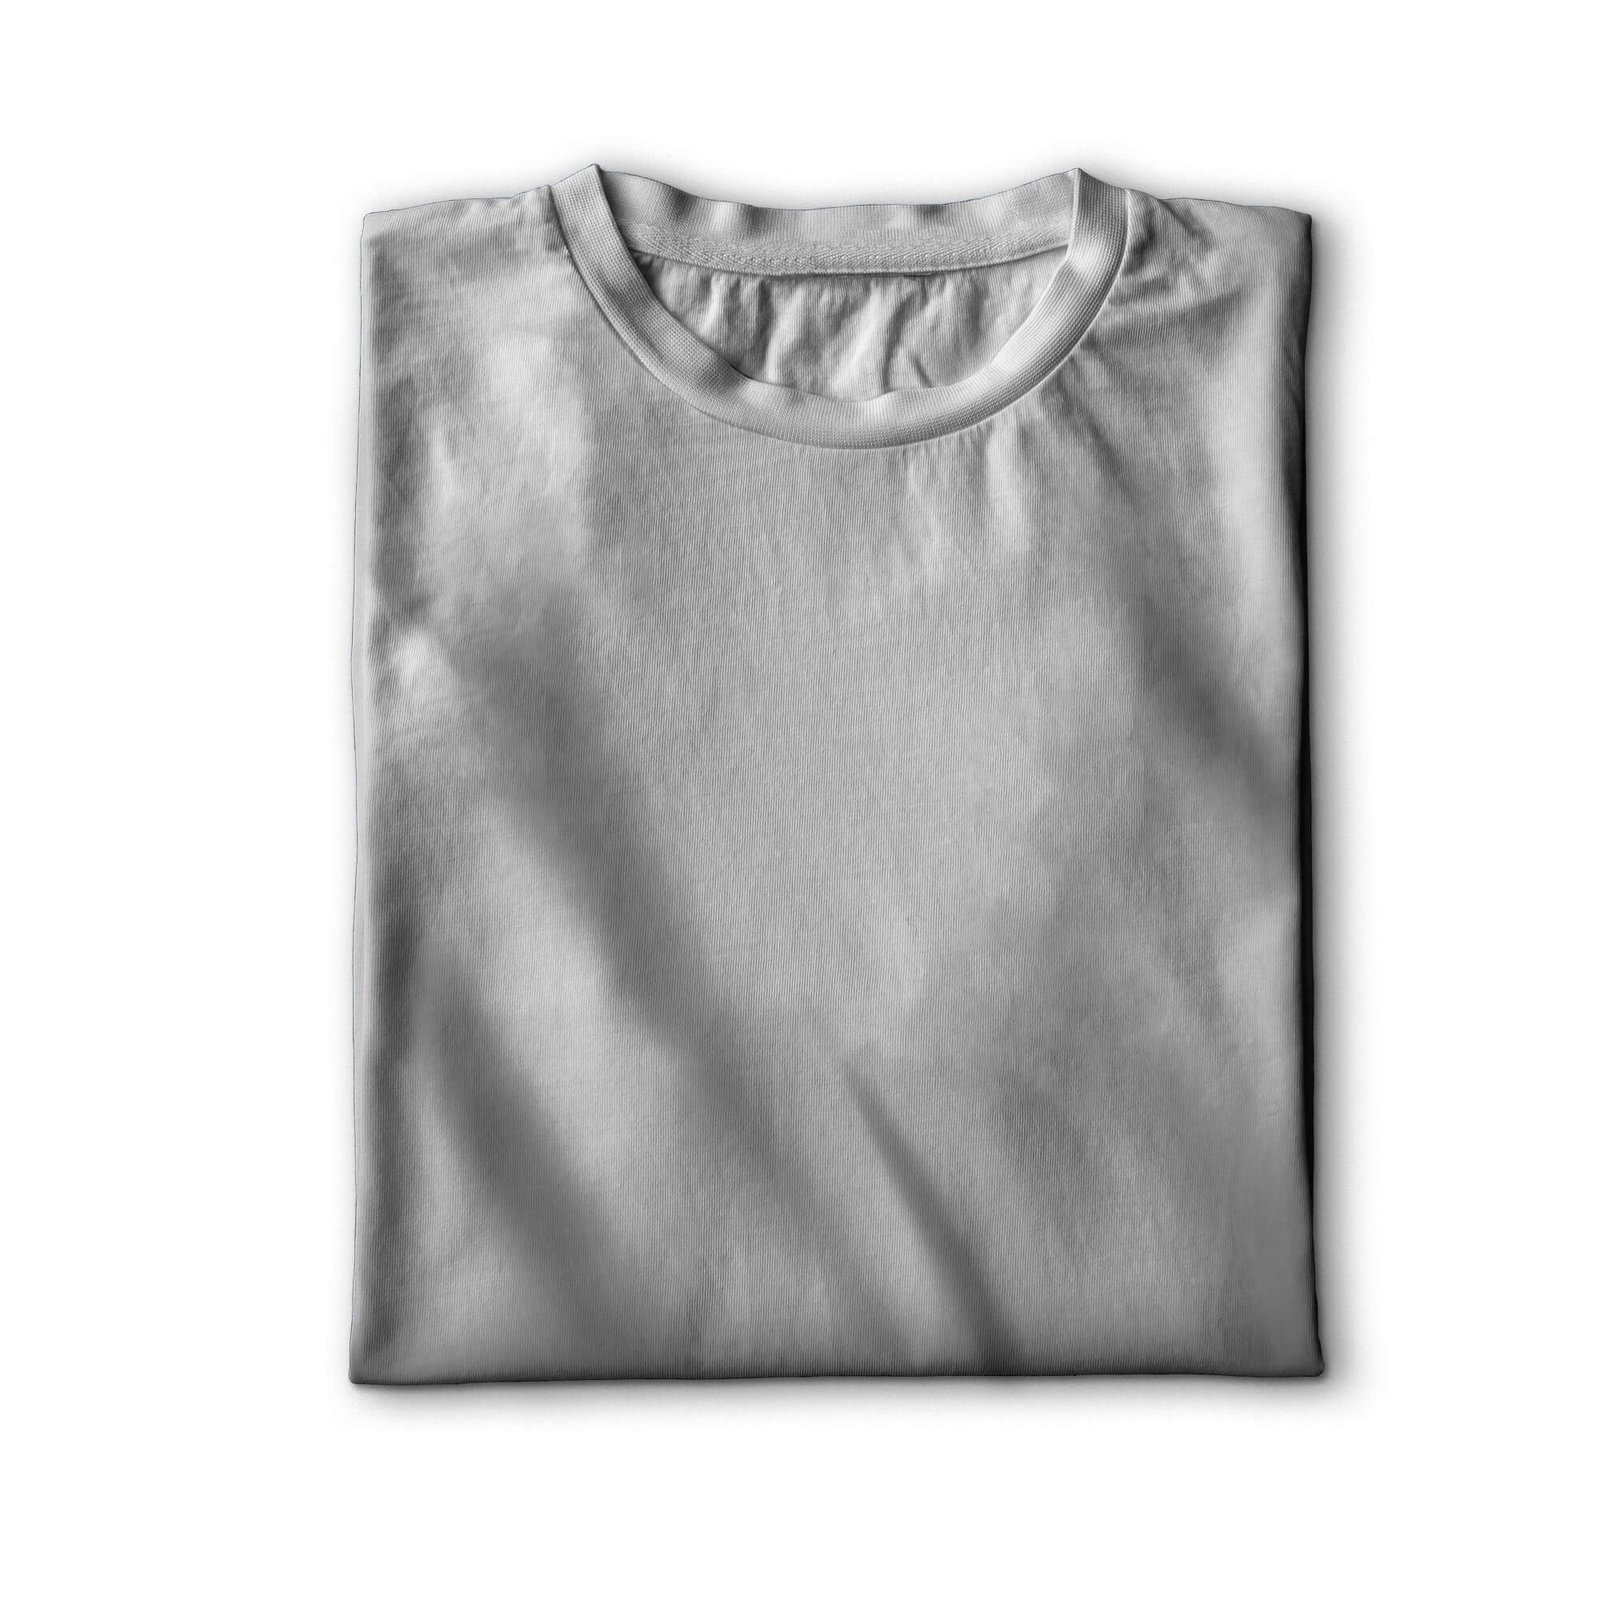 Blank Free Sports T Shirt Mockup PSD Template